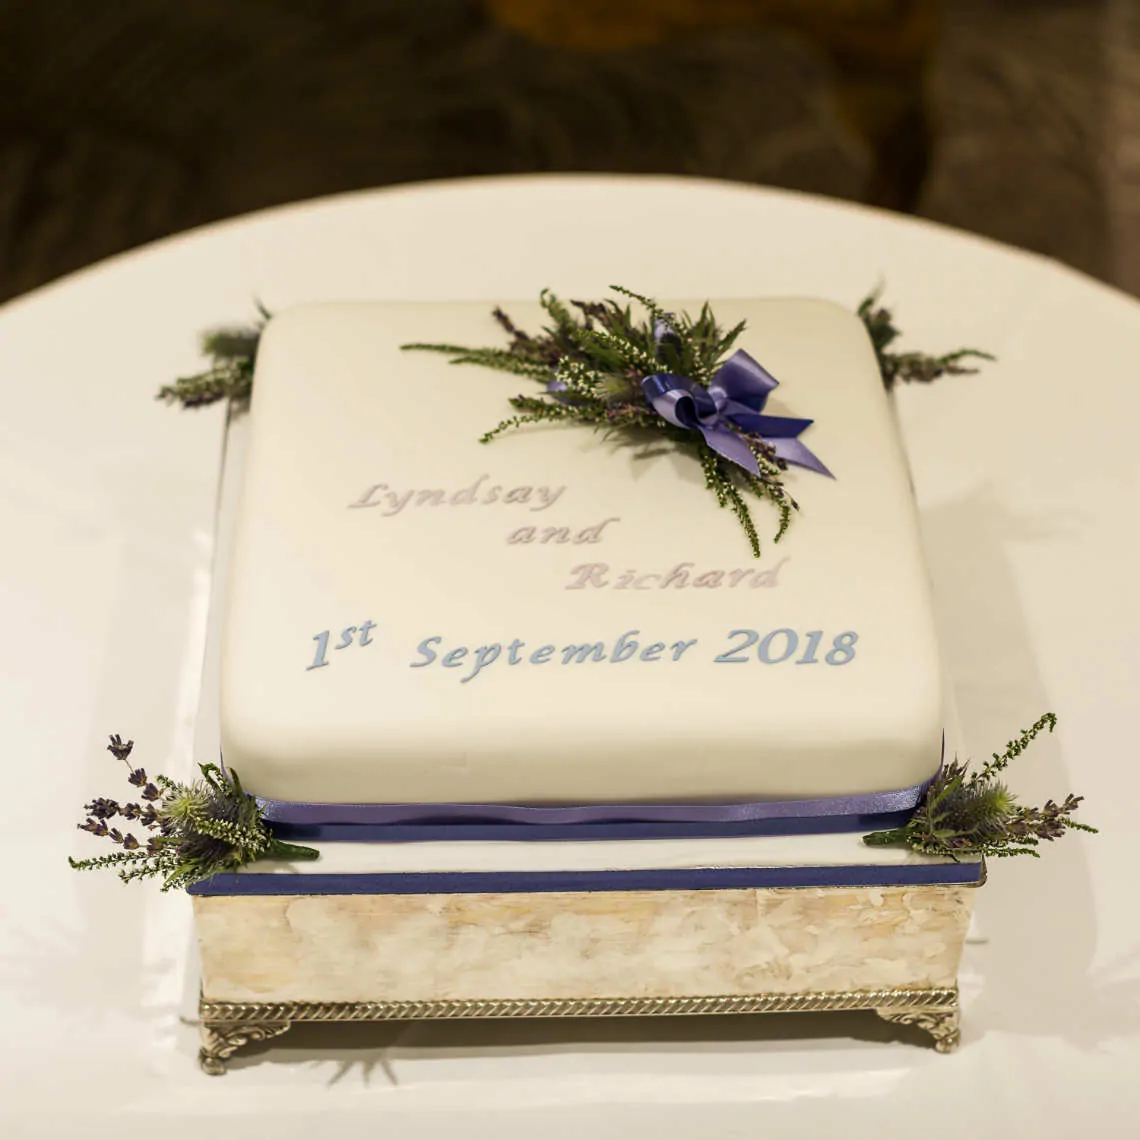 Wedding cake on silver cake stand